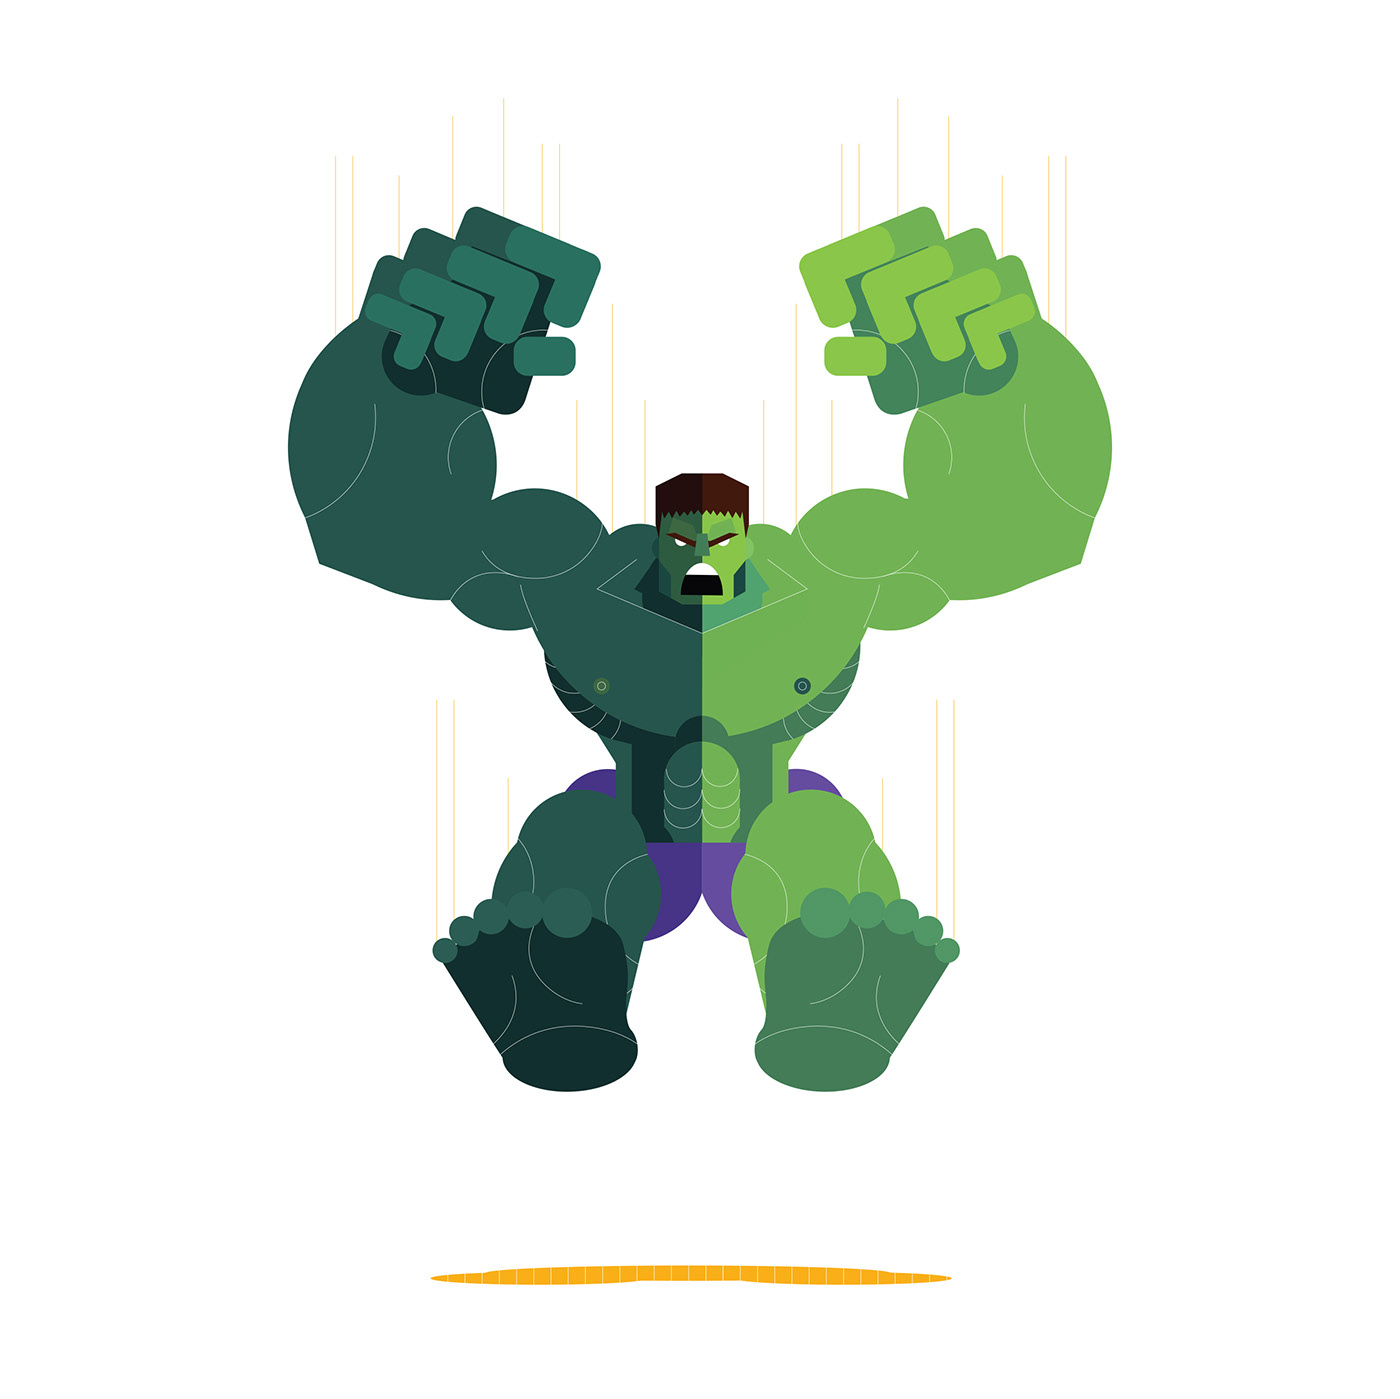 marvel Avengers ironman captain america Thor spiderman Hulk Thanos SuperHero comics